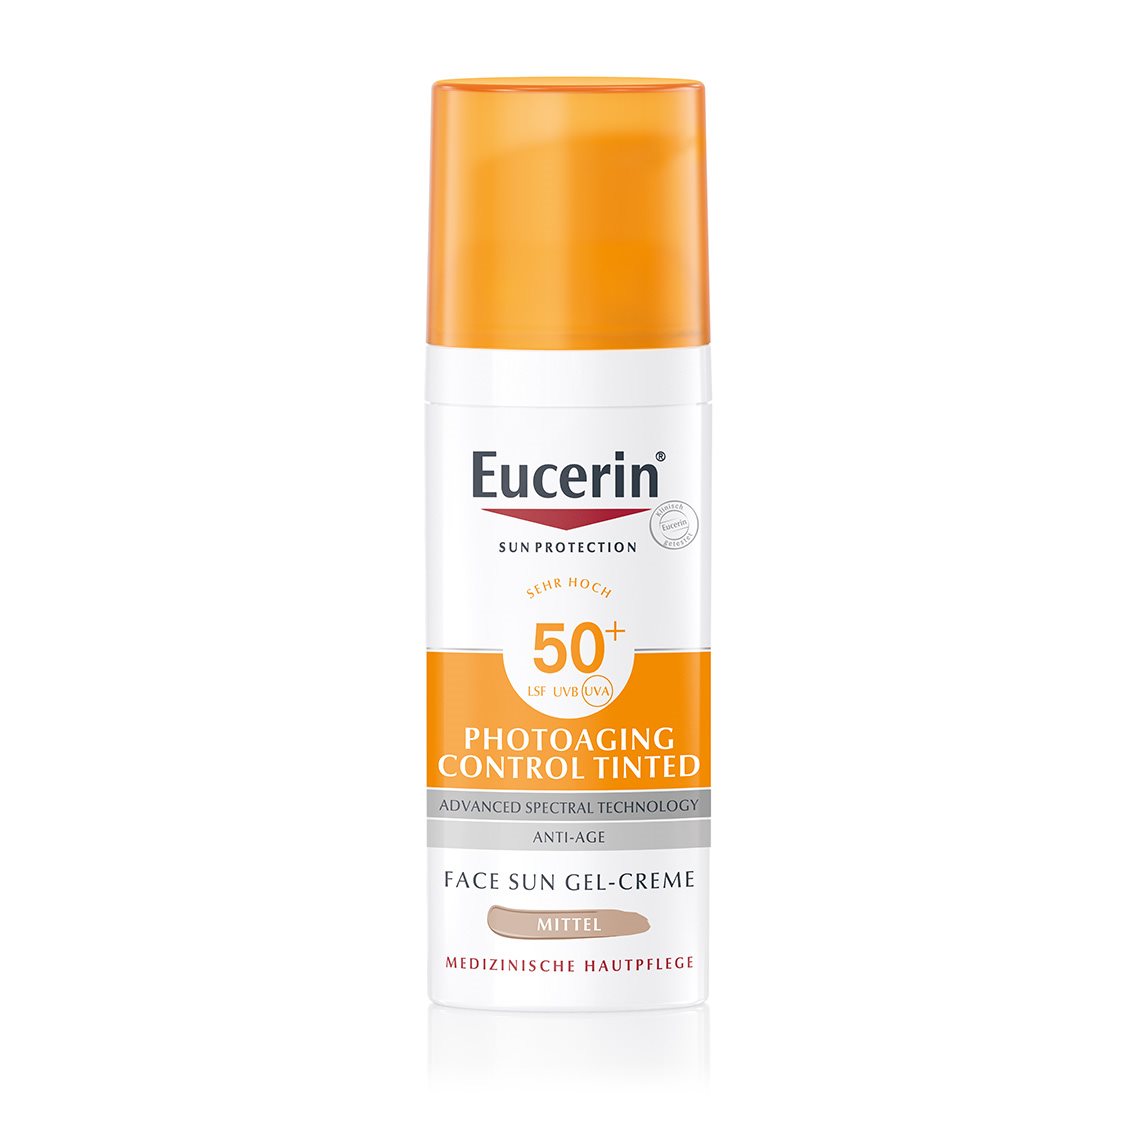 Eucerin Photoaging Control Tinted Face Sun Gel-Creme LSF50+ Mittel